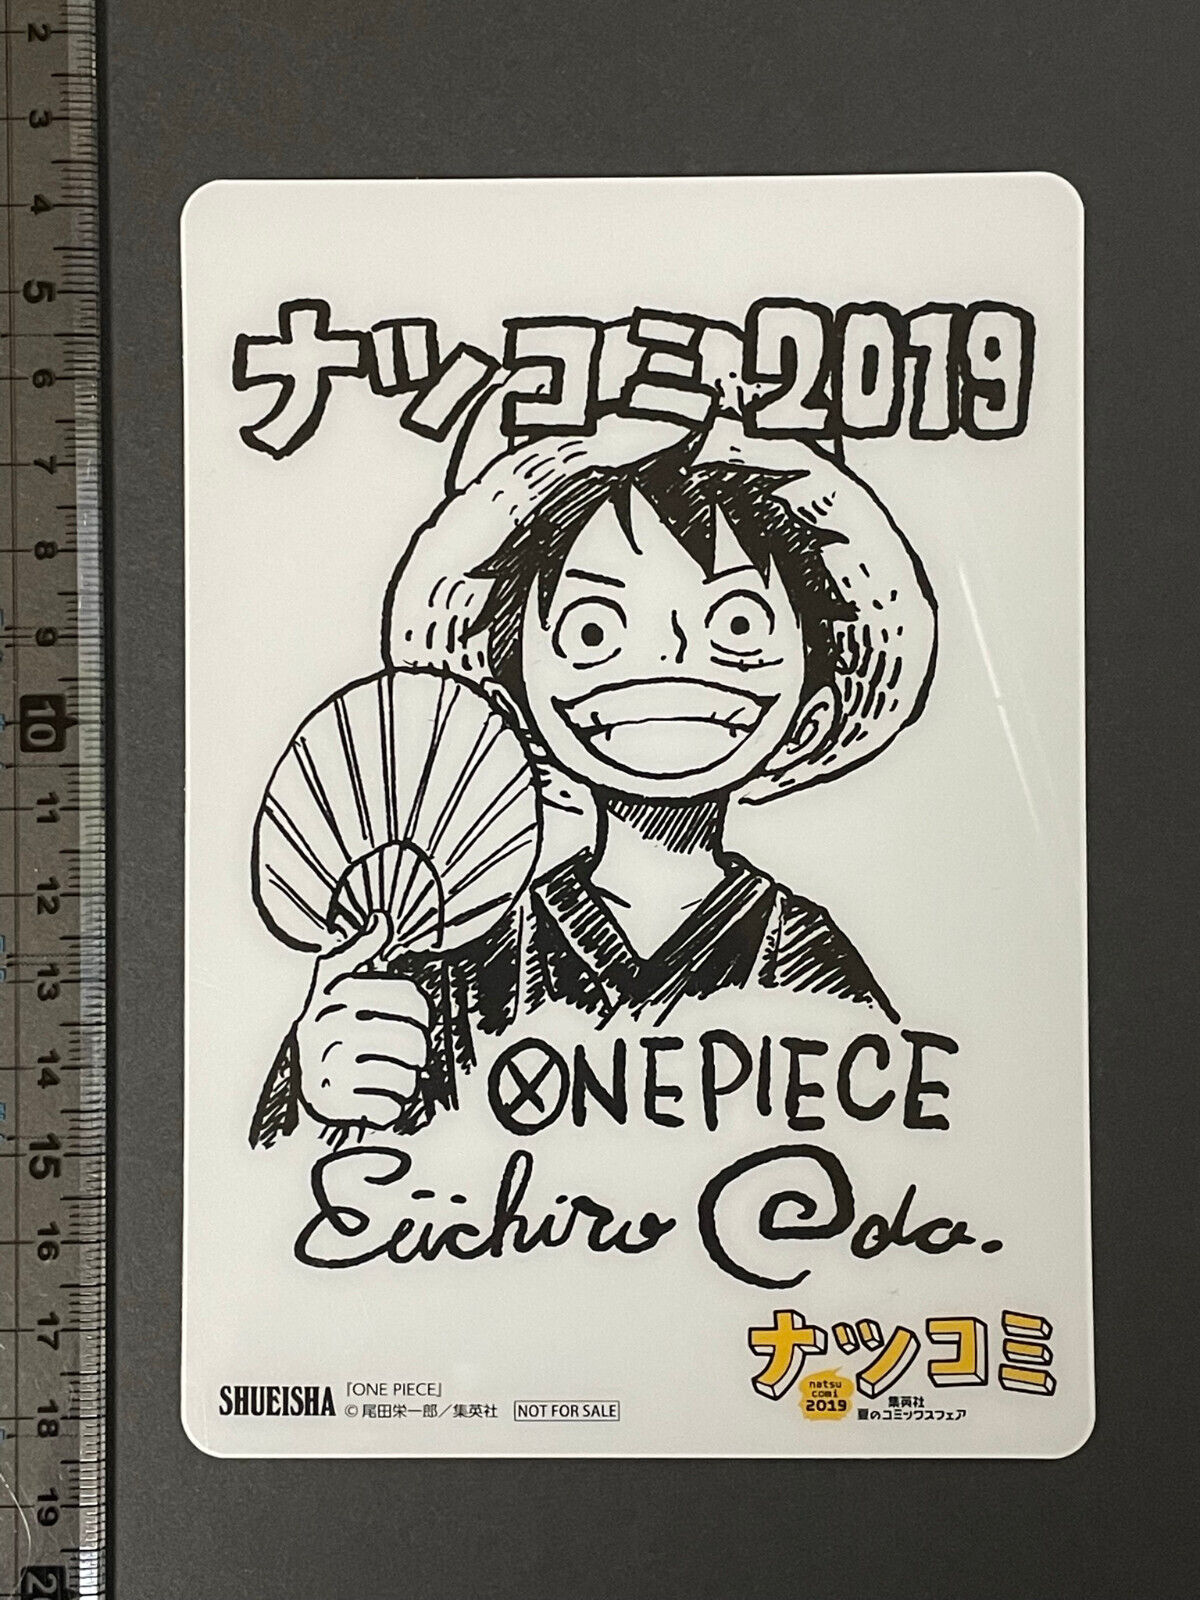 ONE PIECE Monkey D Luffy Plastic Card Autographed By Eiichiro Oda Mini Print